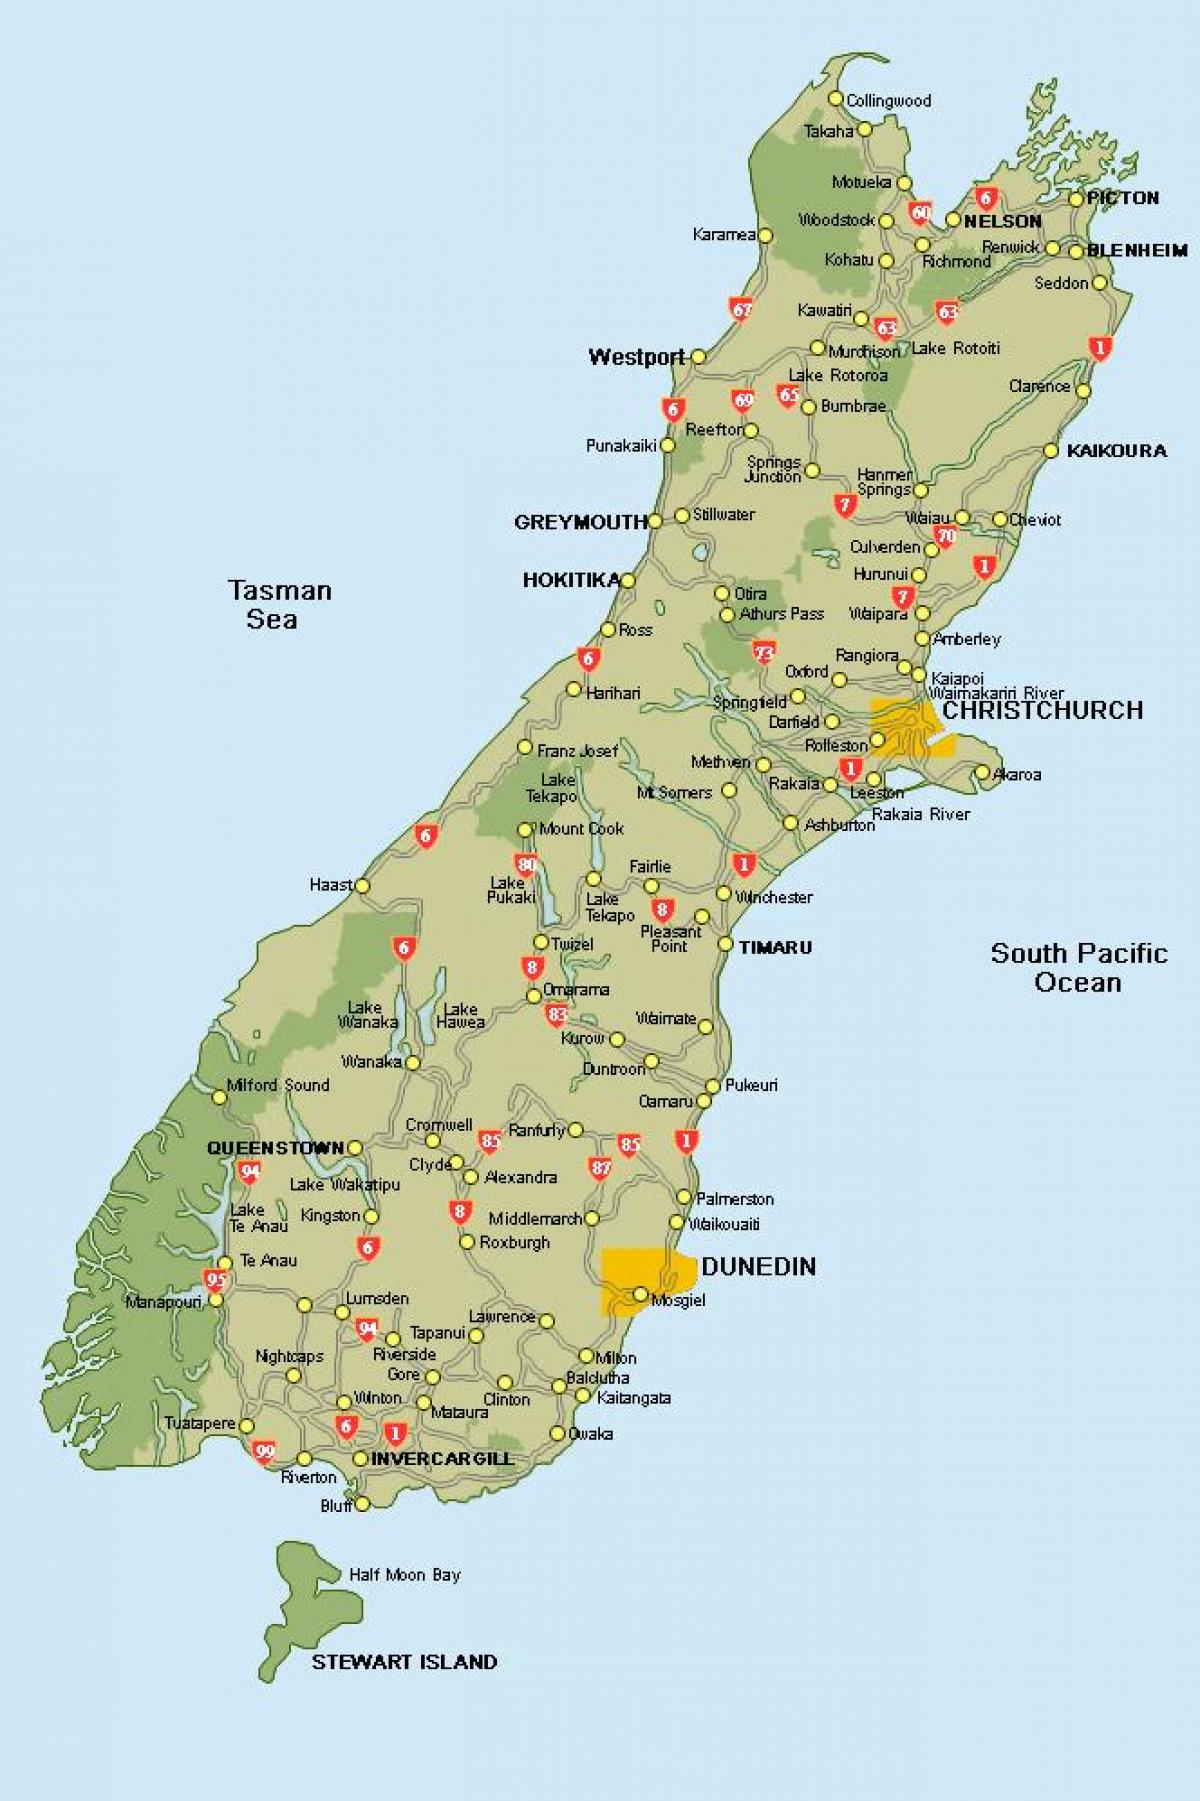 nova zelanda mapa de l'illa sud de la carretera mapa